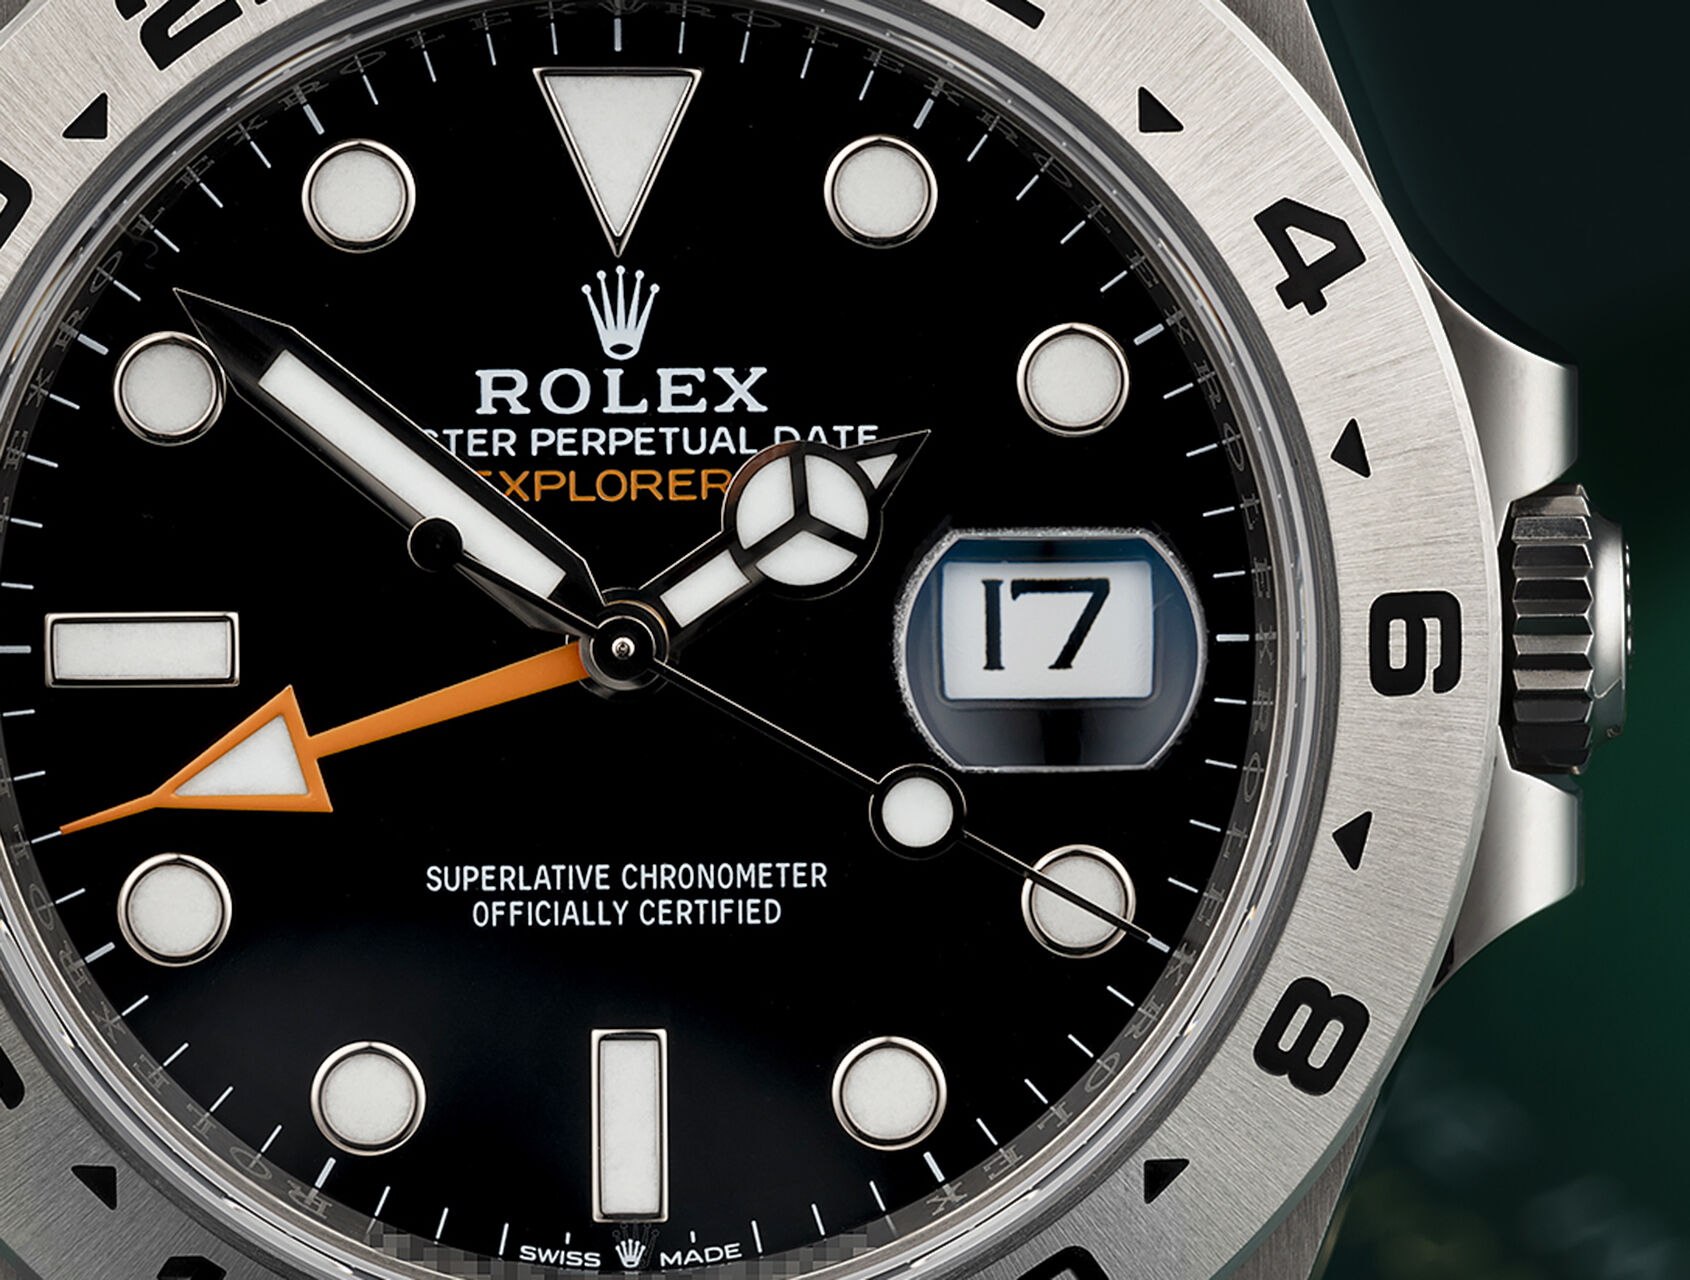 ref 226570 | 226570 - Latest Model | Rolex Explorer II